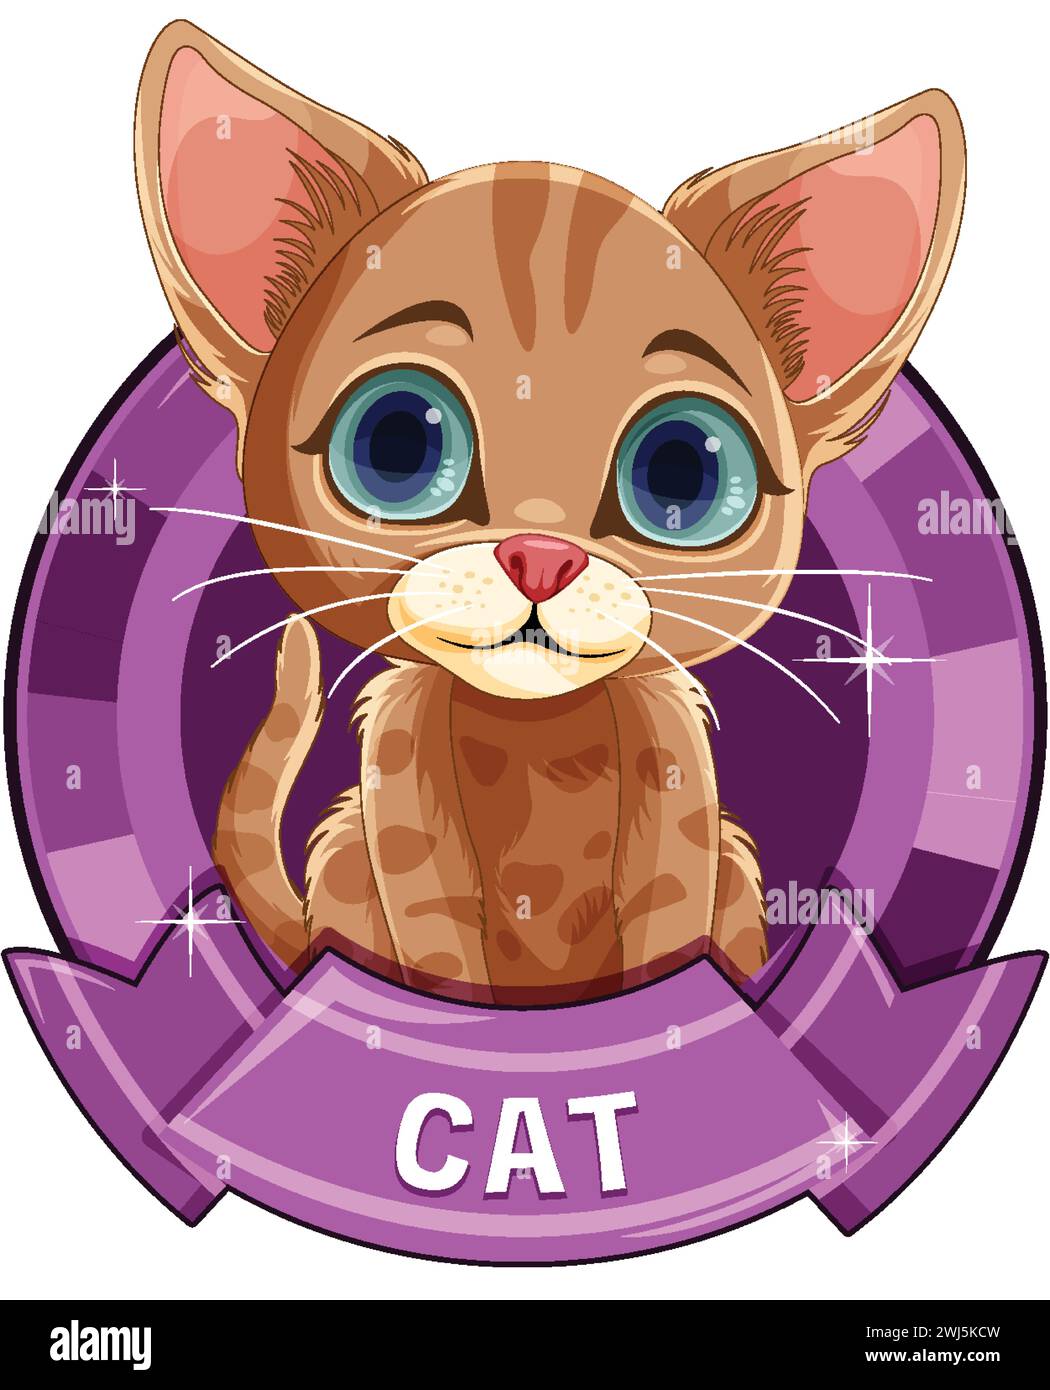 Cute brown tabby kitten inside a purple emblem Stock Vector